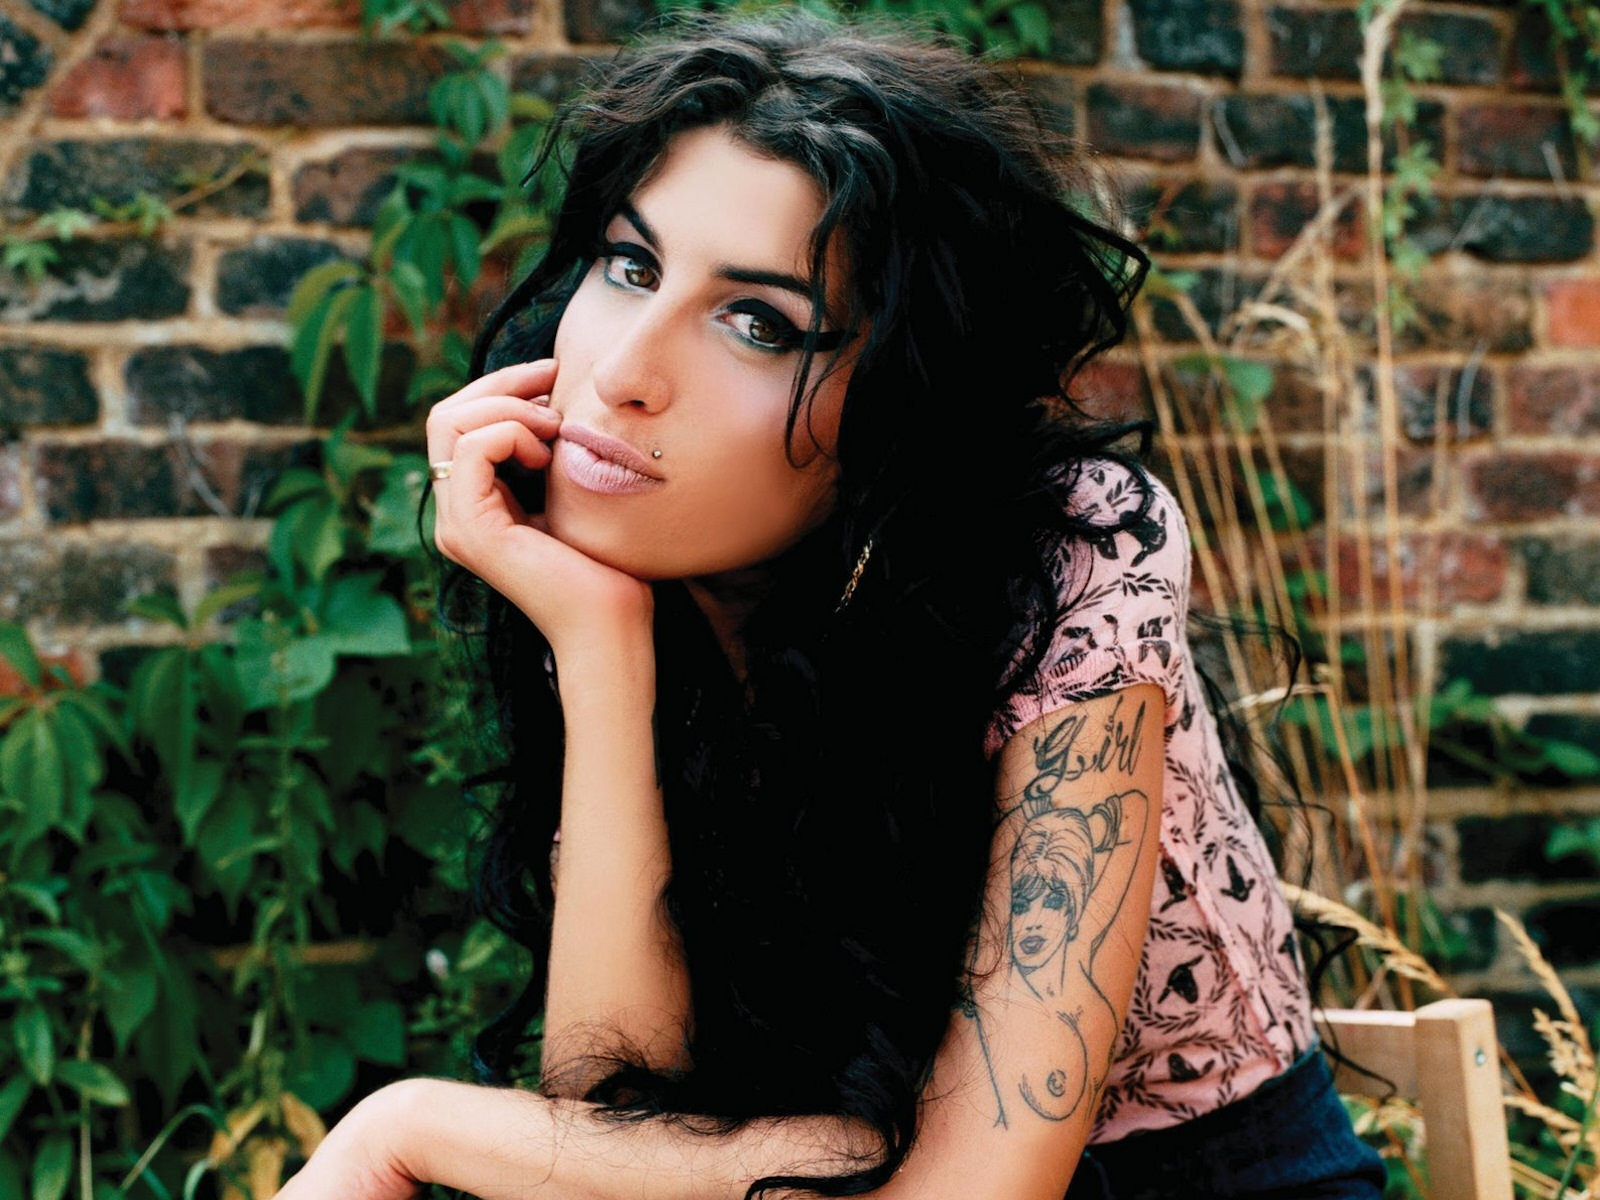 Amy_Winehouse_02_1600x1200.jpg